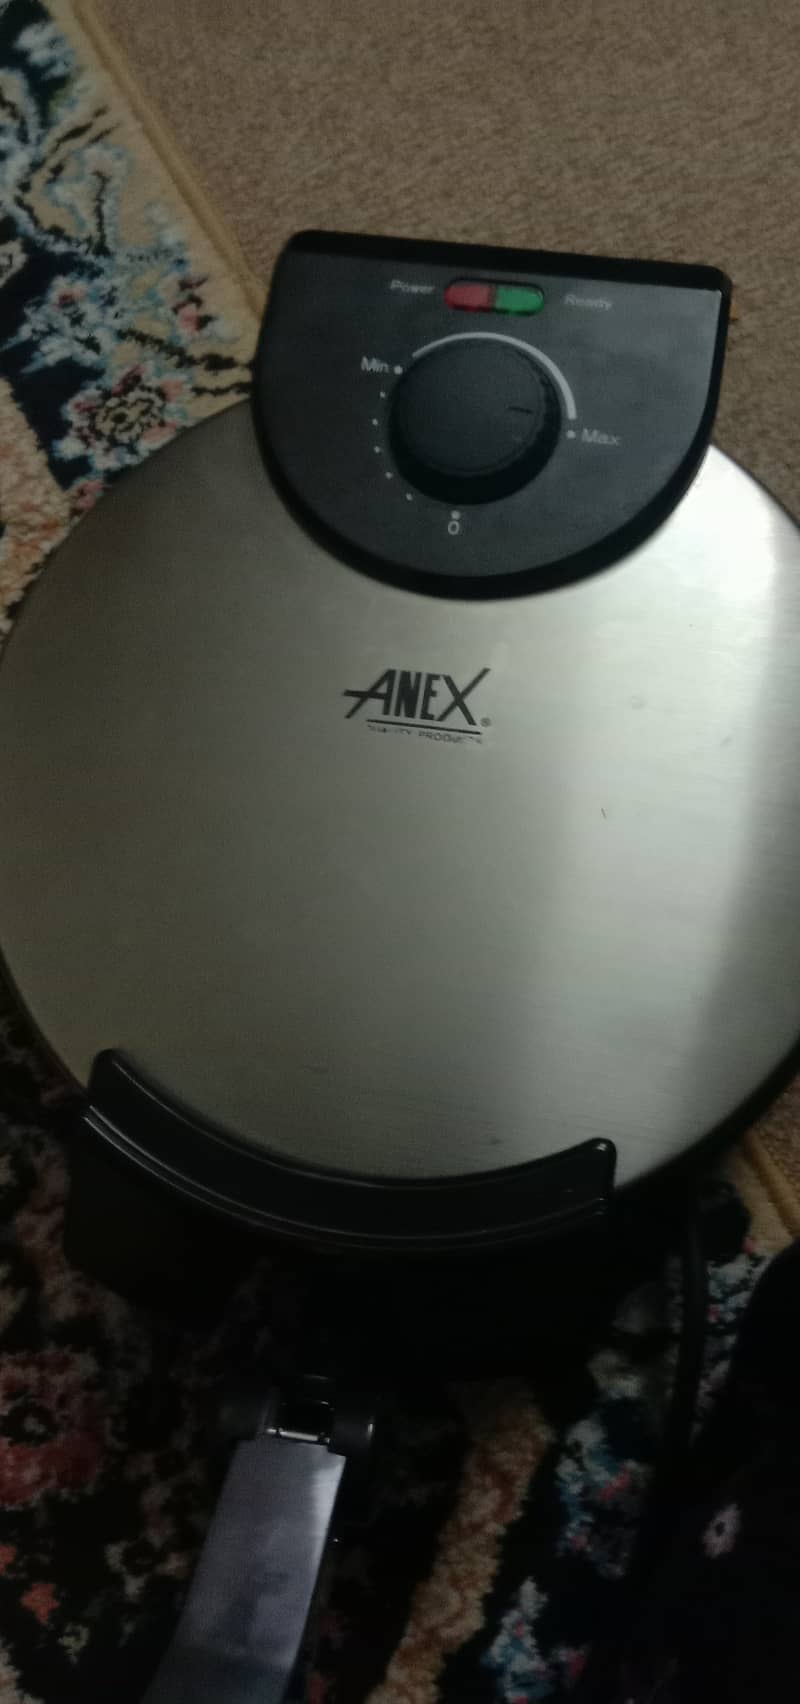 ANEX deluxe roti maker 9